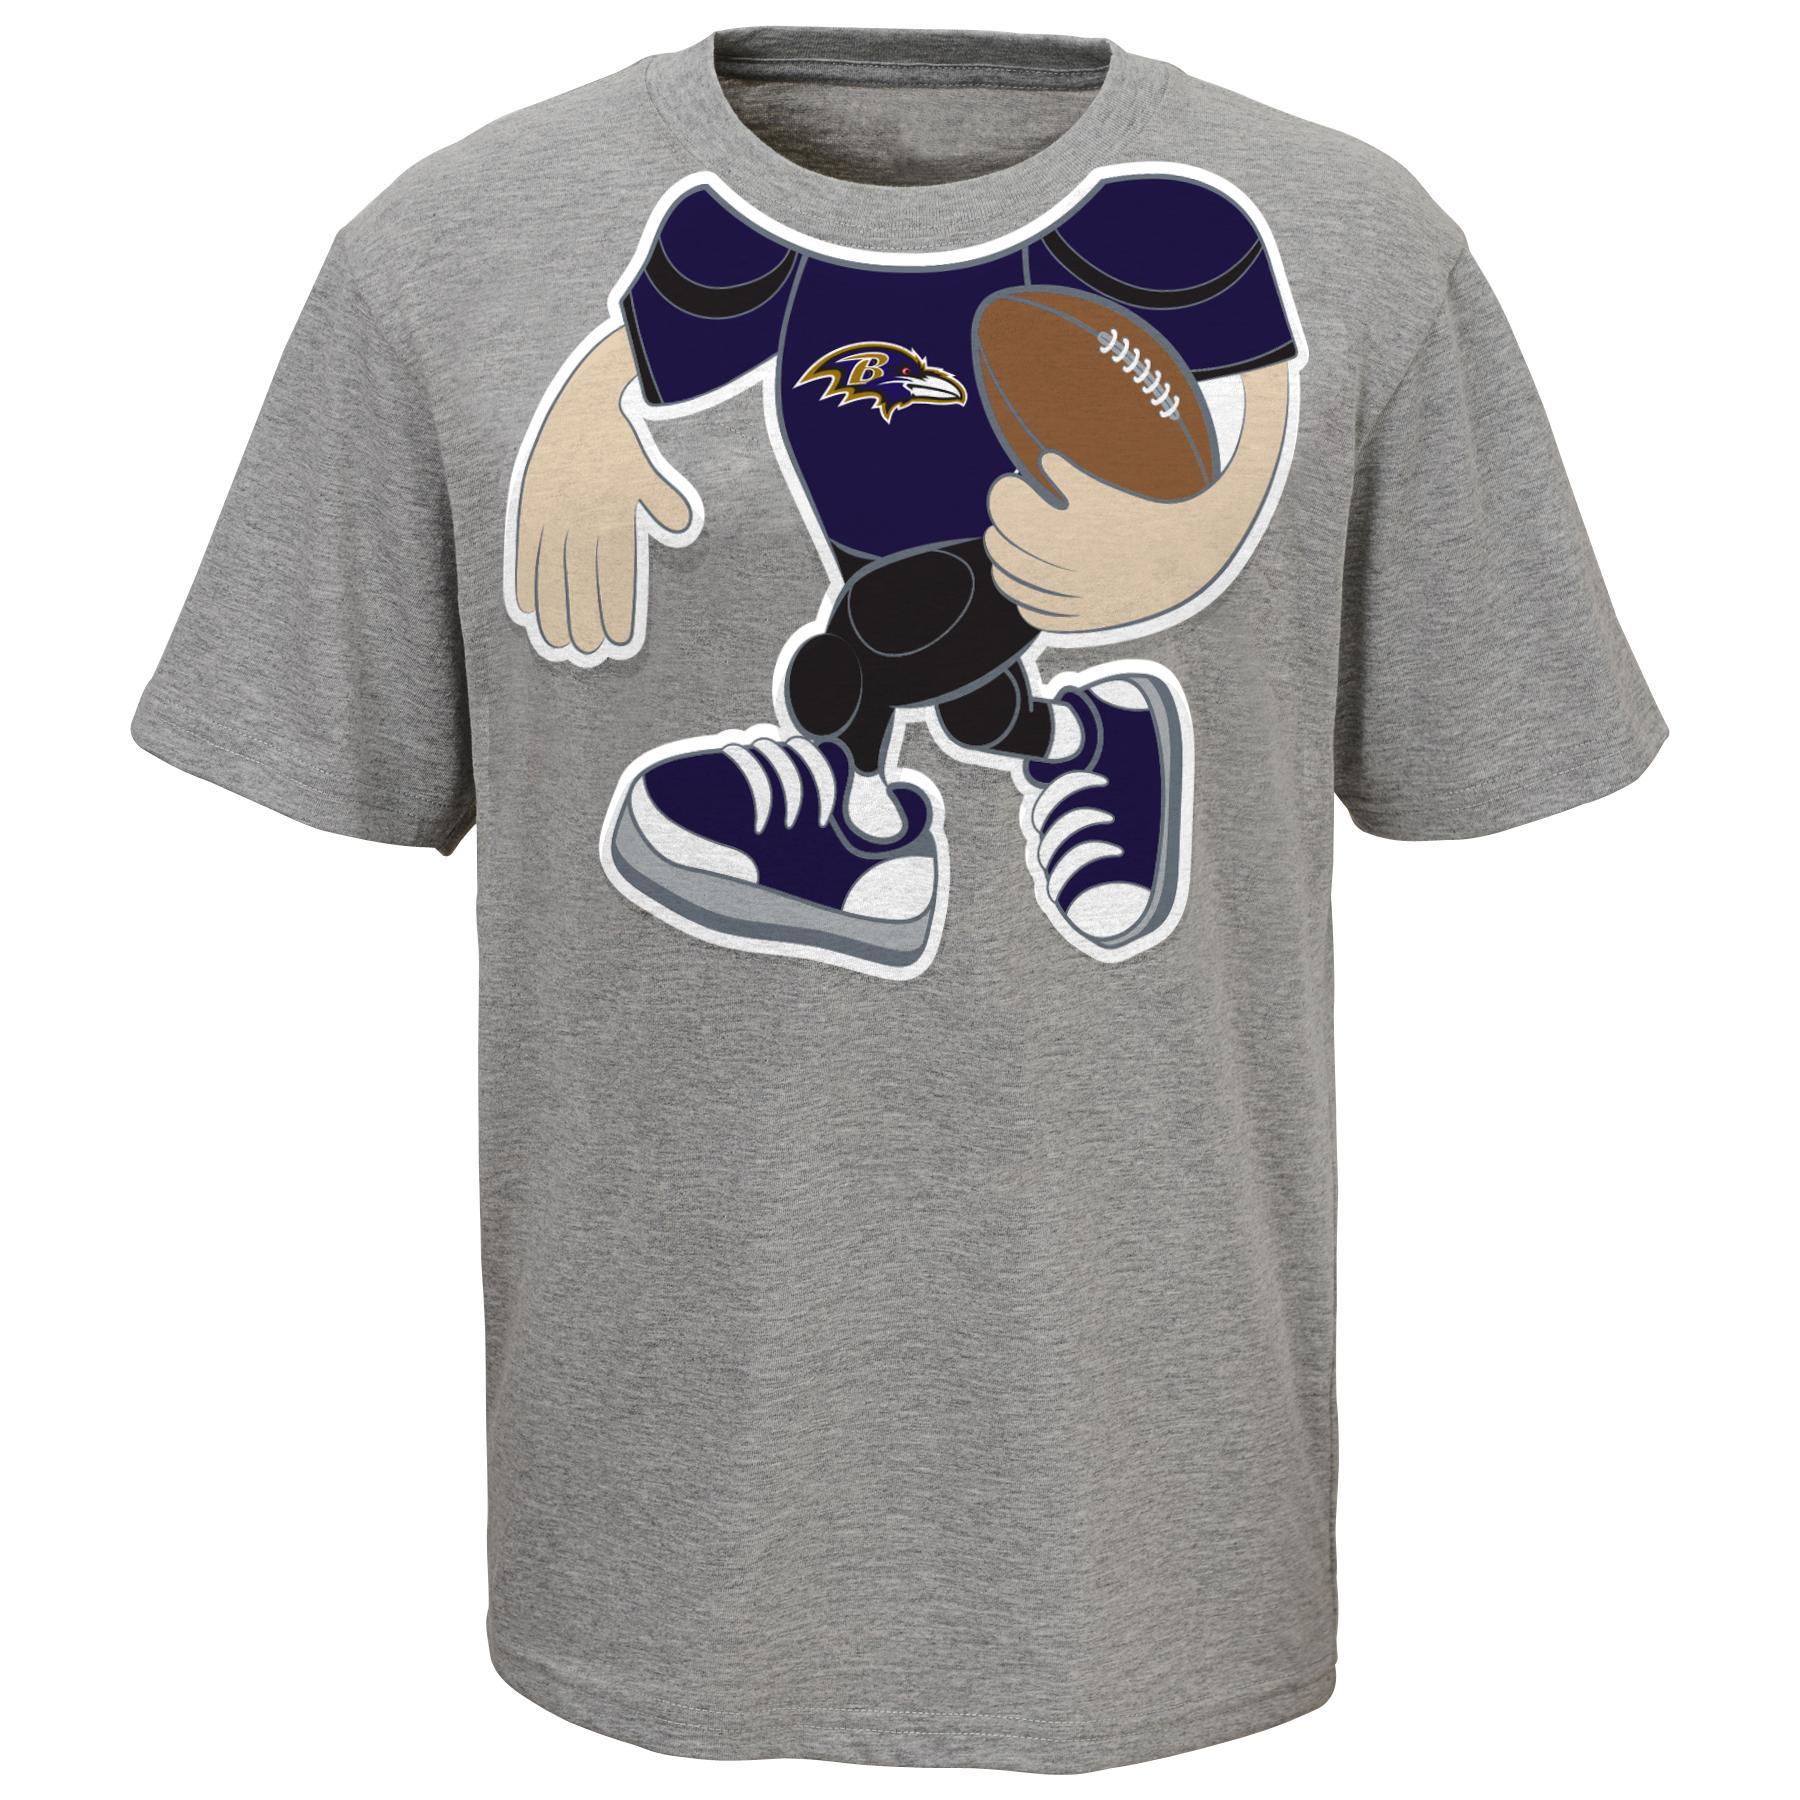 NFL Toddler Boys' Graphic T-Shirt - Baltimore Ravens